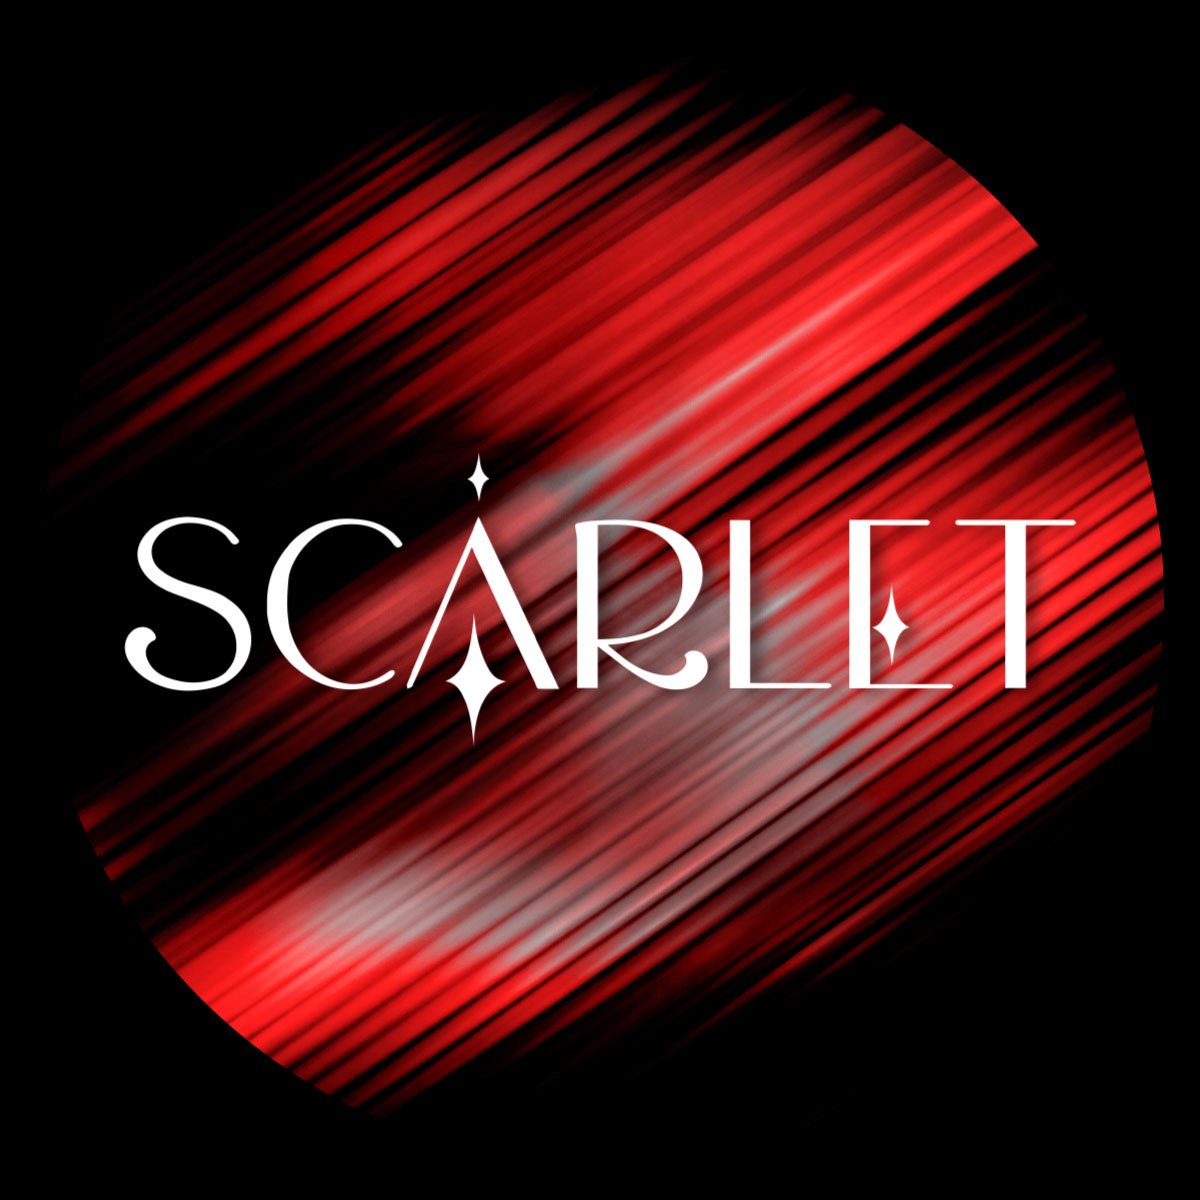 Scarlet Bar